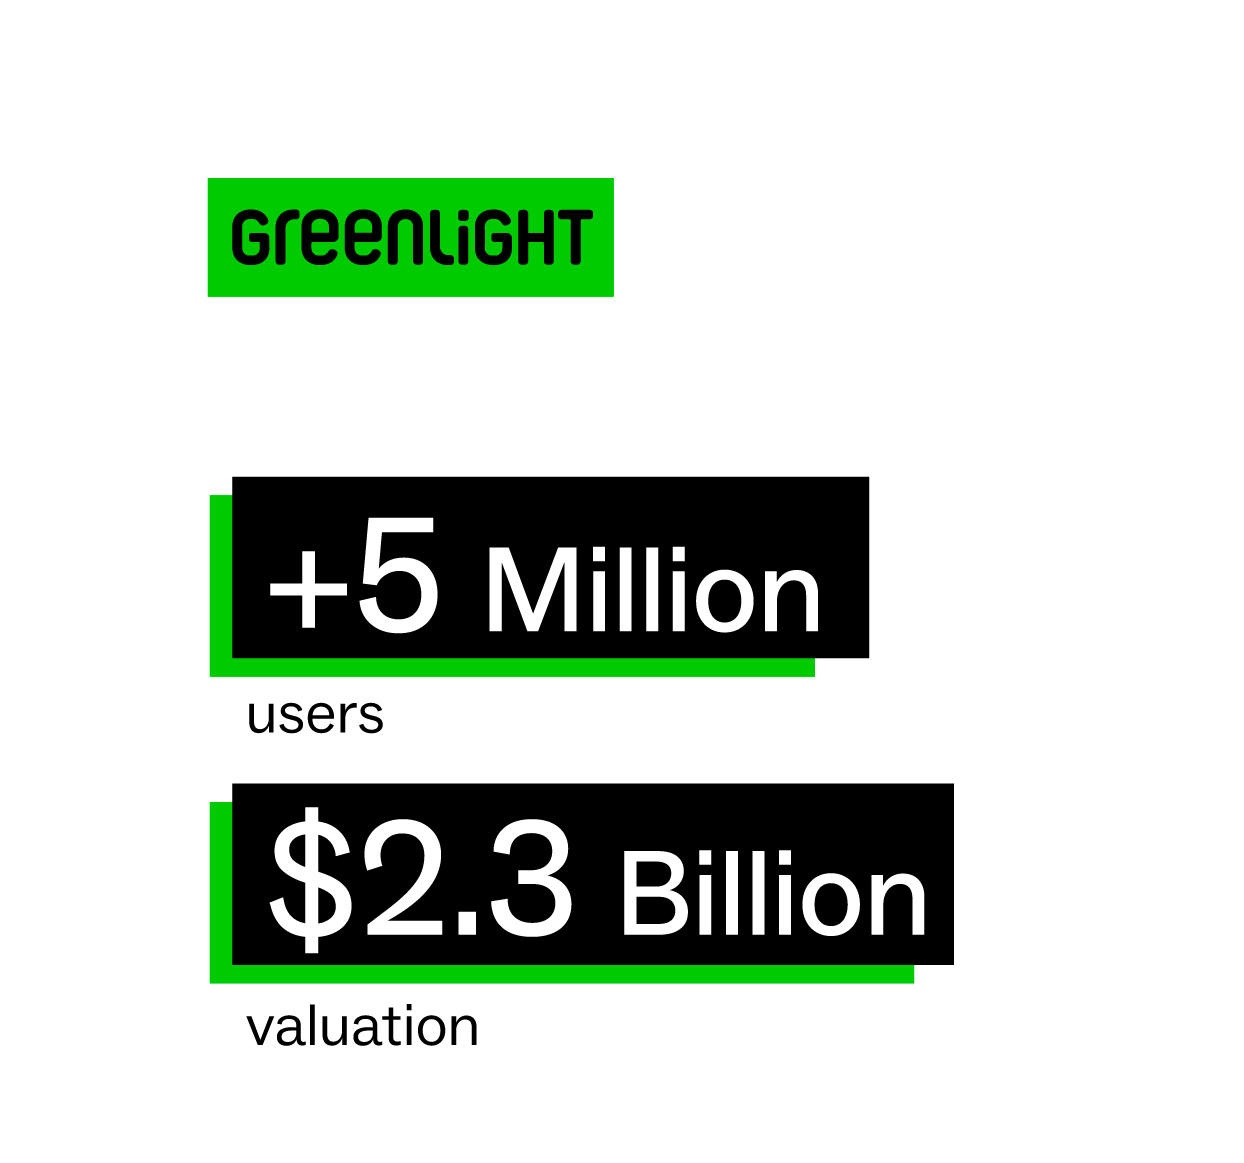 Greenlight +5 Million users and $2.3 Billion valuation